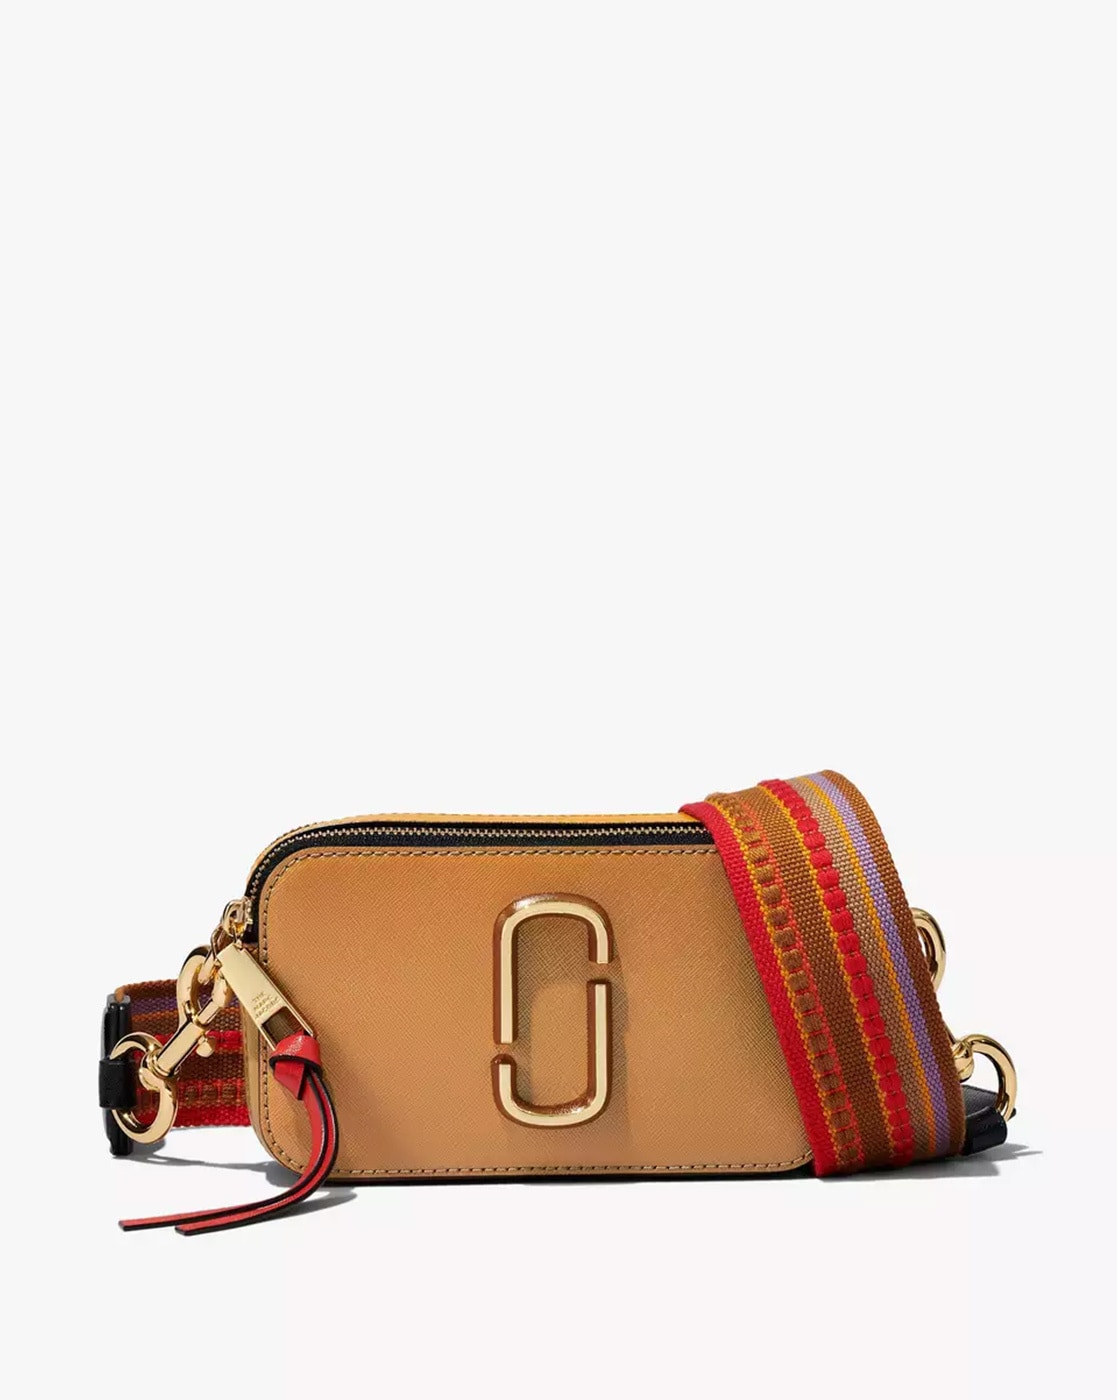 Marc Jacobs Women's Snapshot Leather Crossbody Bag